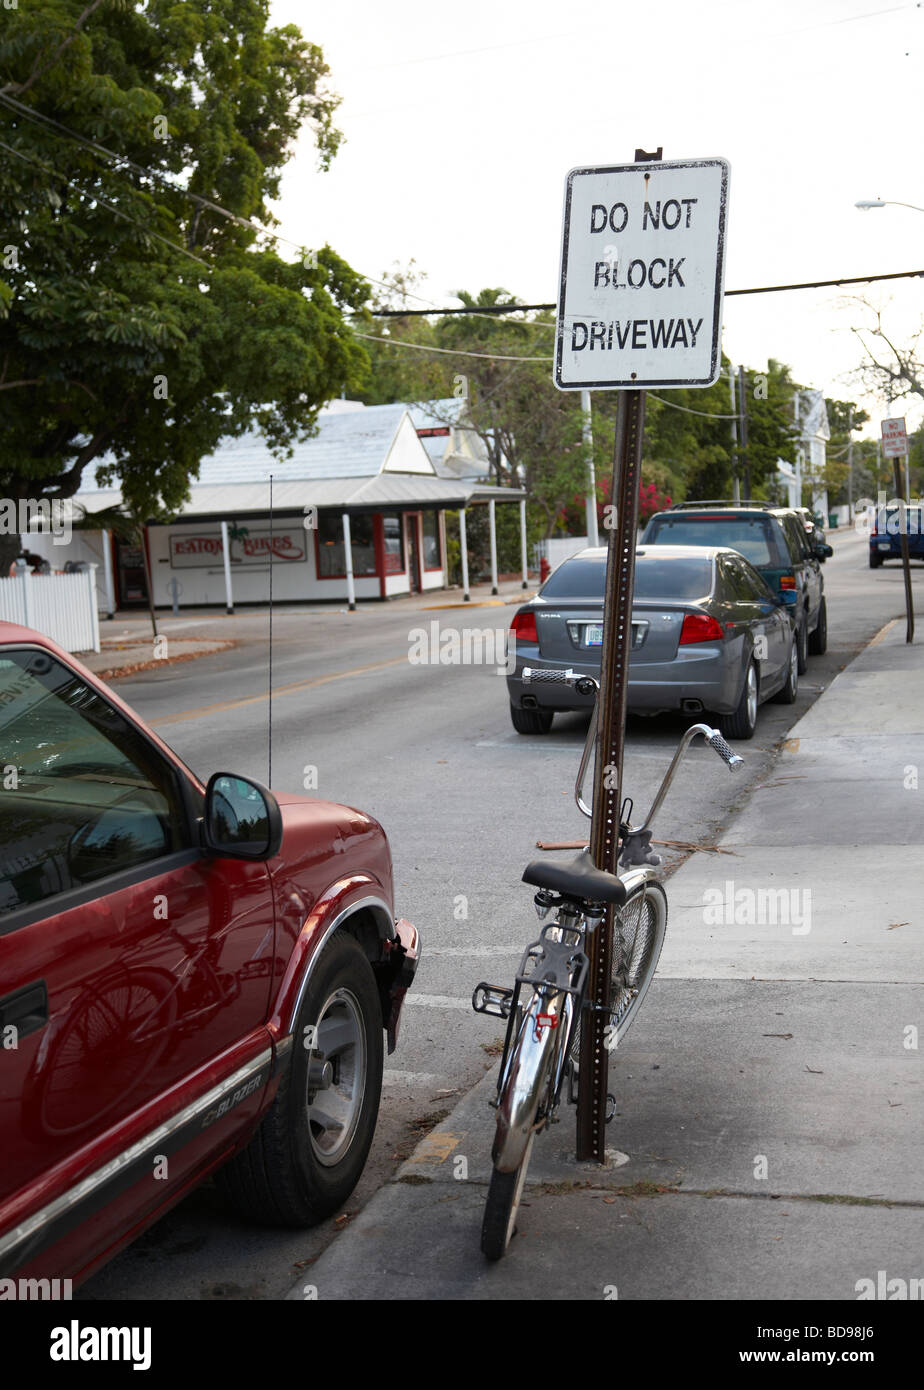 do not block driveway sign Stock Photo